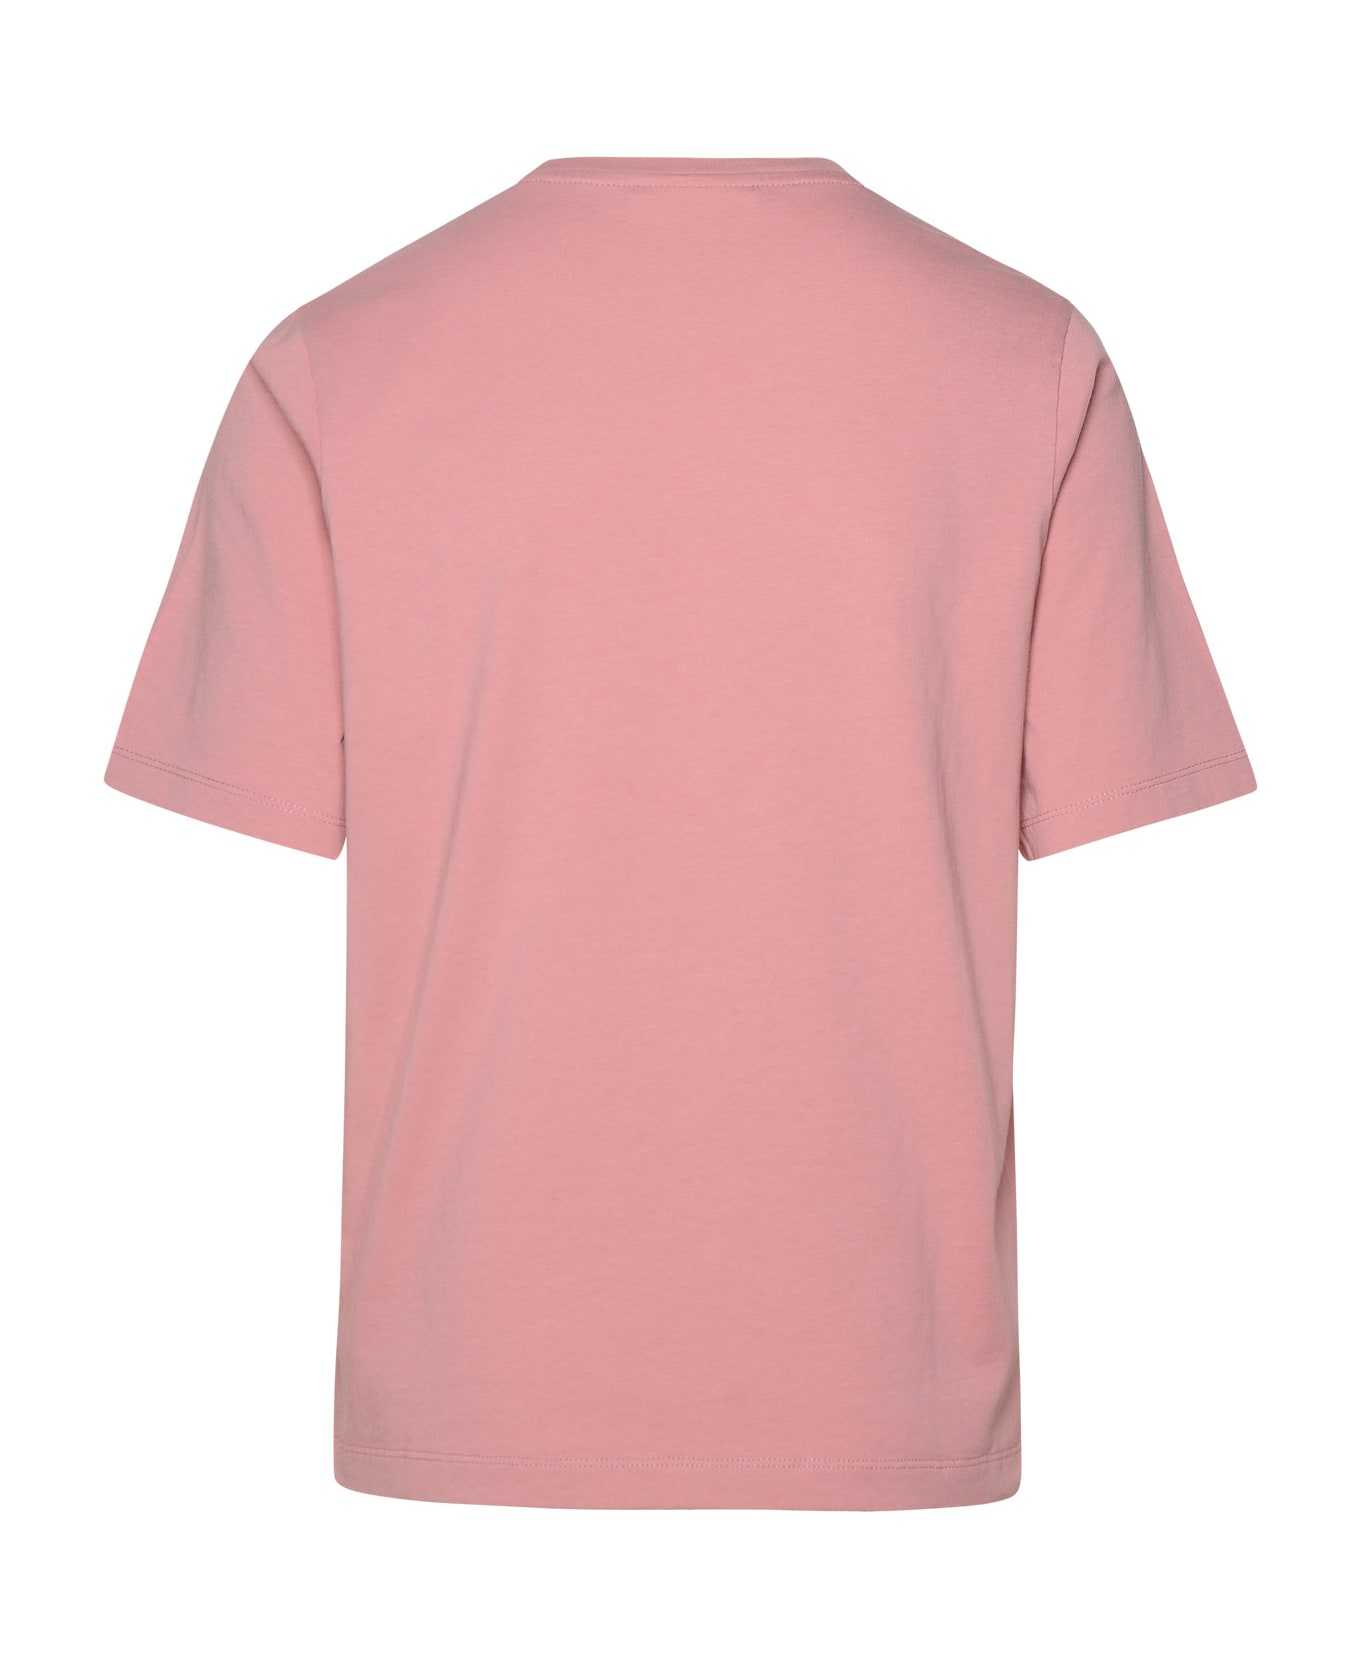 Maison Kitsuné Pink Cotton T-shirt - Rose